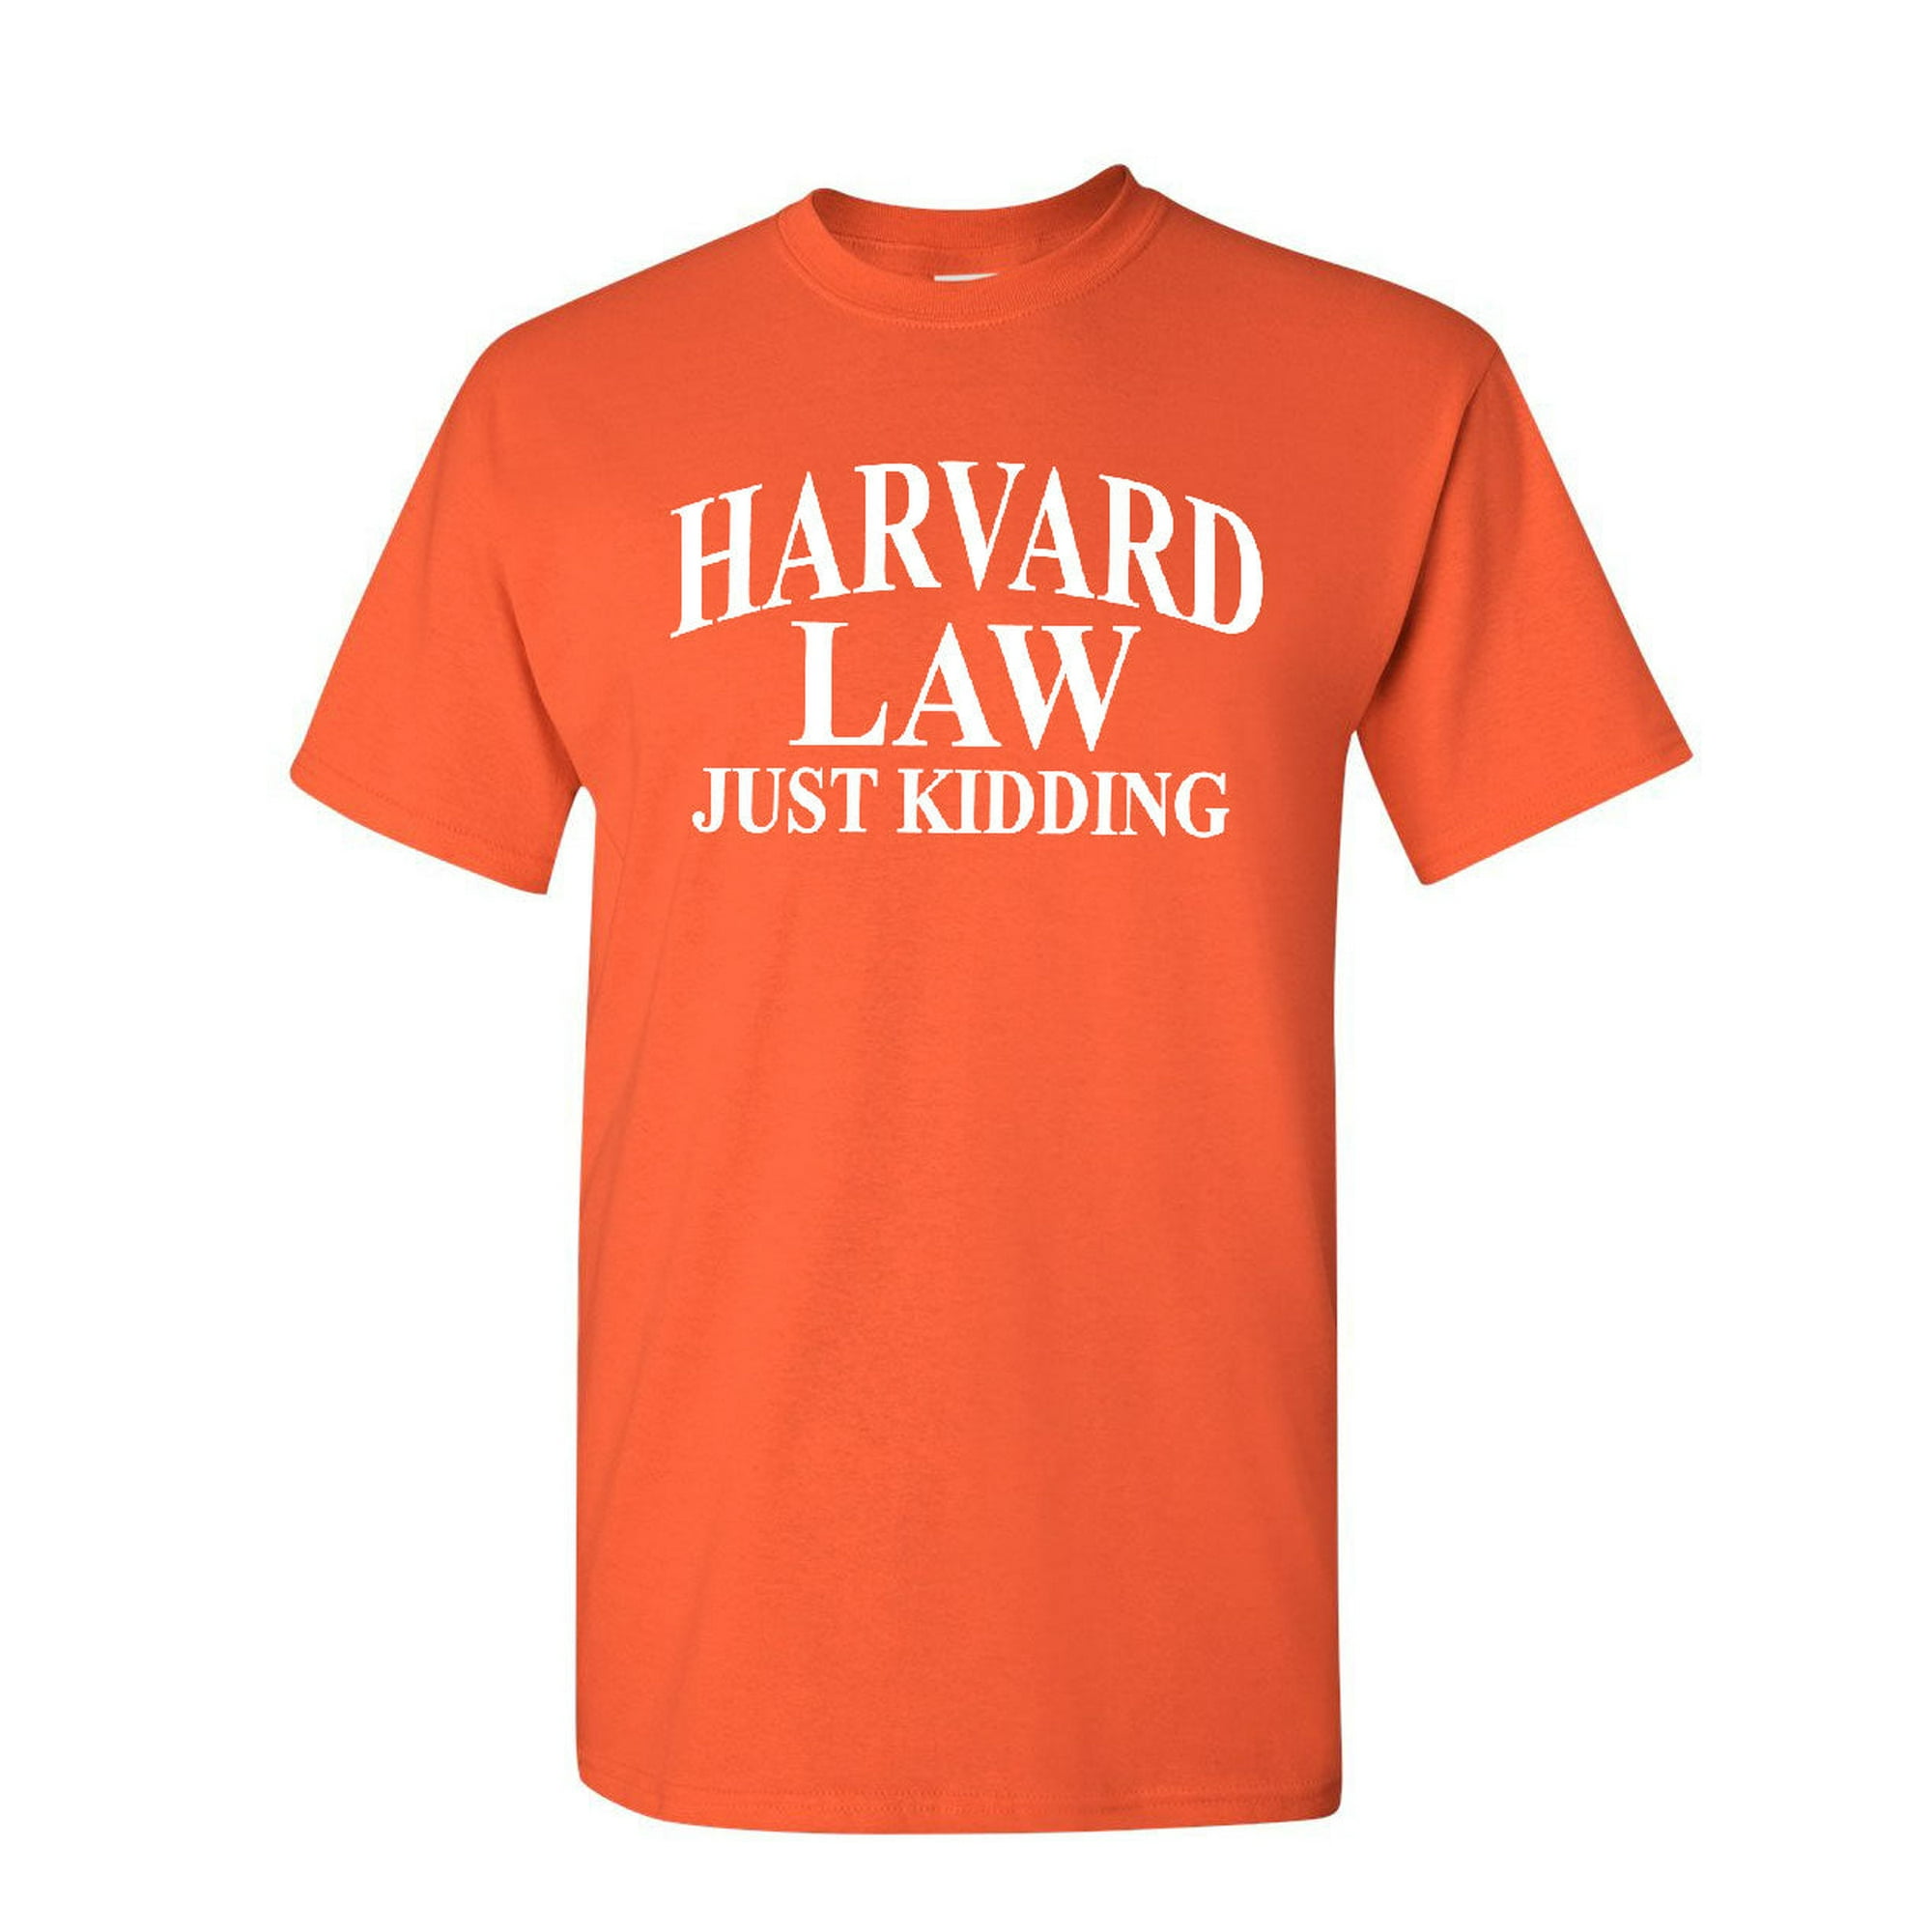 Tee Hunt Harward Law Just Kidding T-Shirt Funny College School Joke Mens Shirt, Orange, 5X-Large - Walmart.com